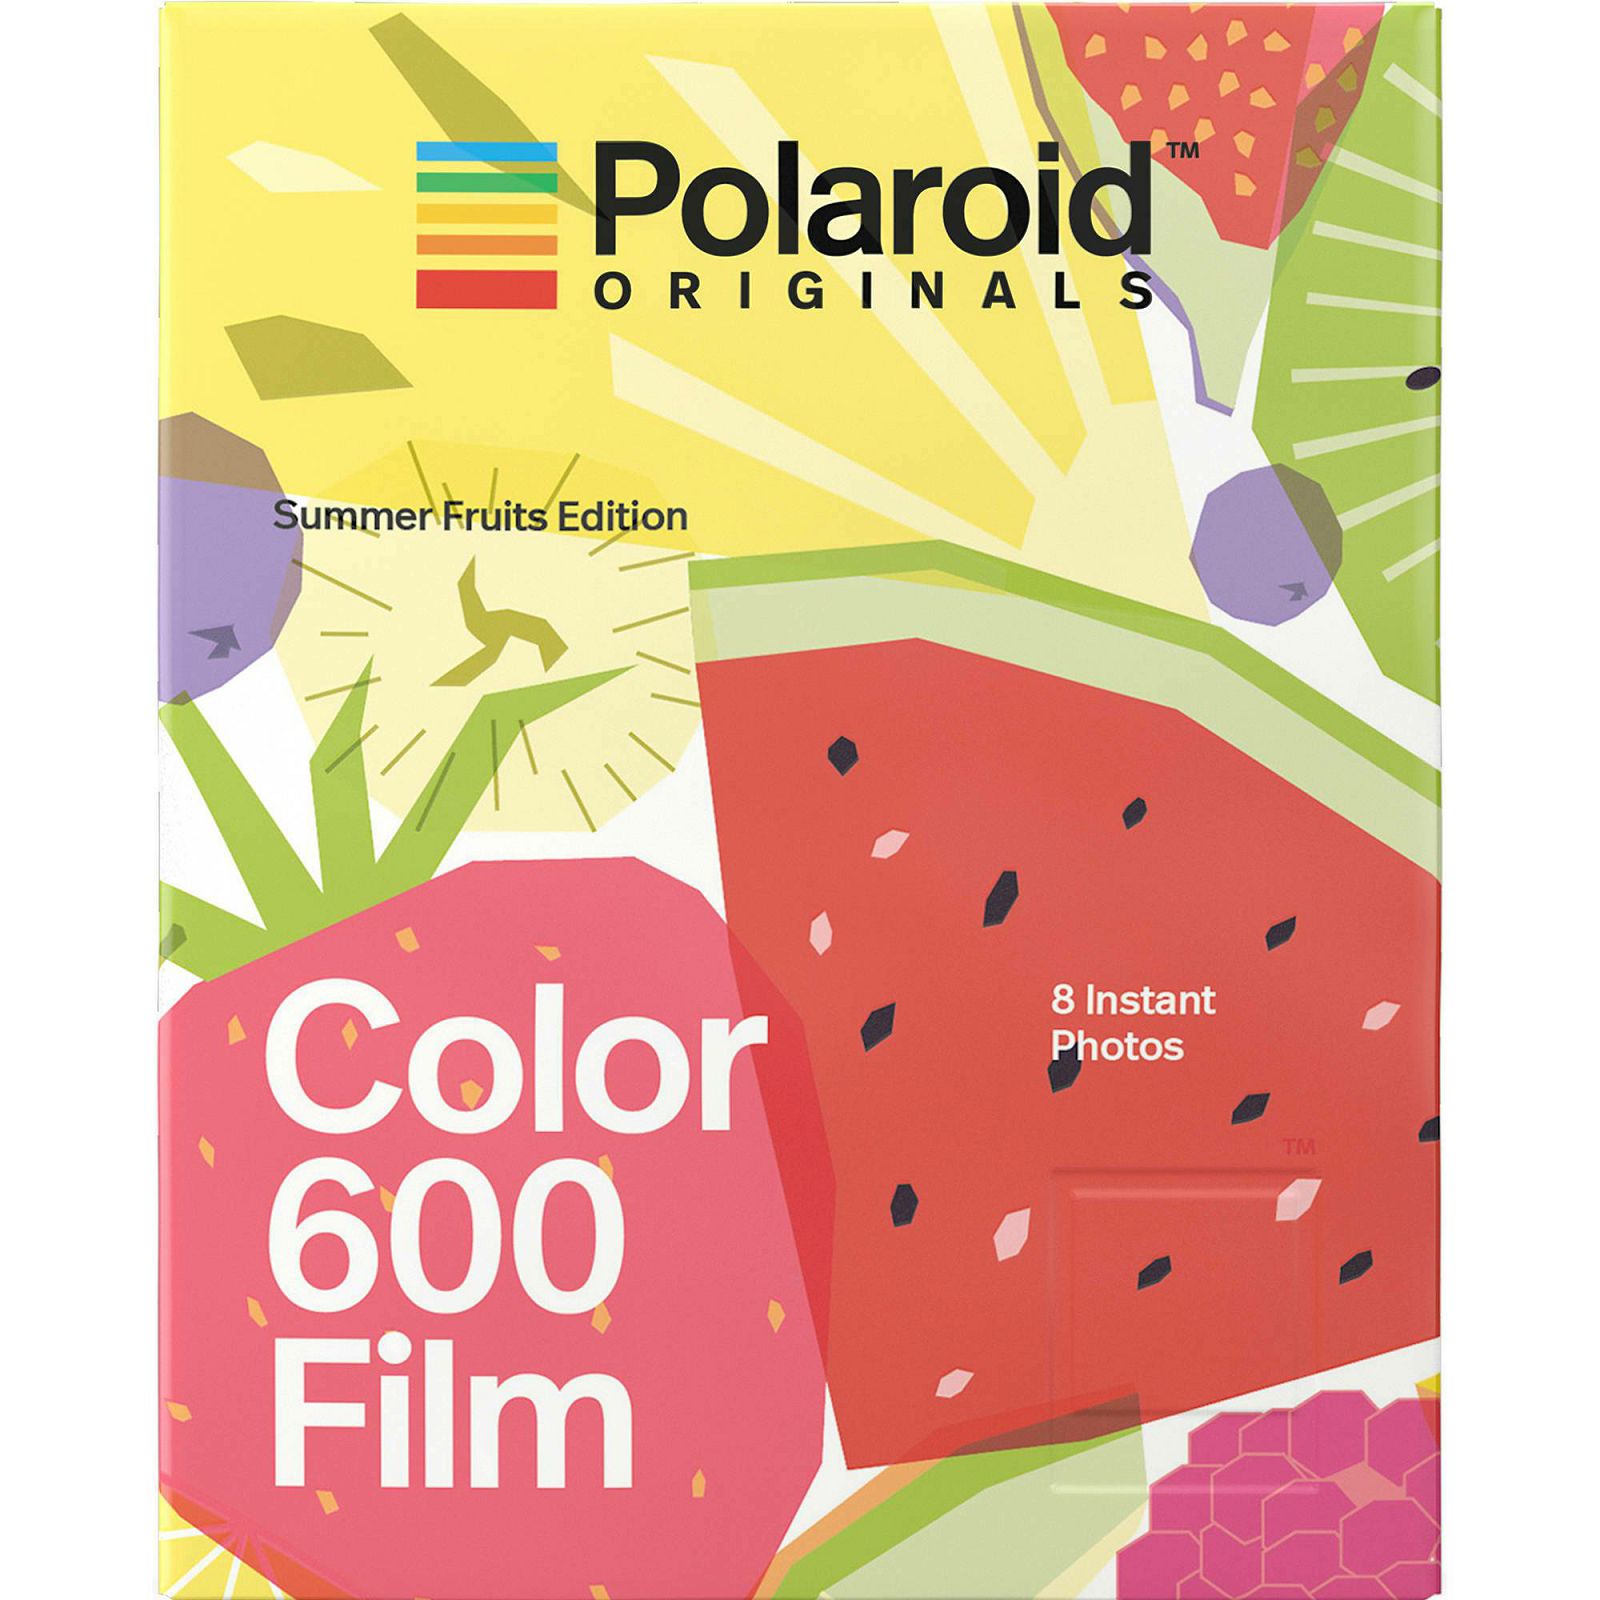 Polaroid Originals Color Film for 600 Summer Fruits foto papir za fotografije u boji za Instant fotoaparate (004929)